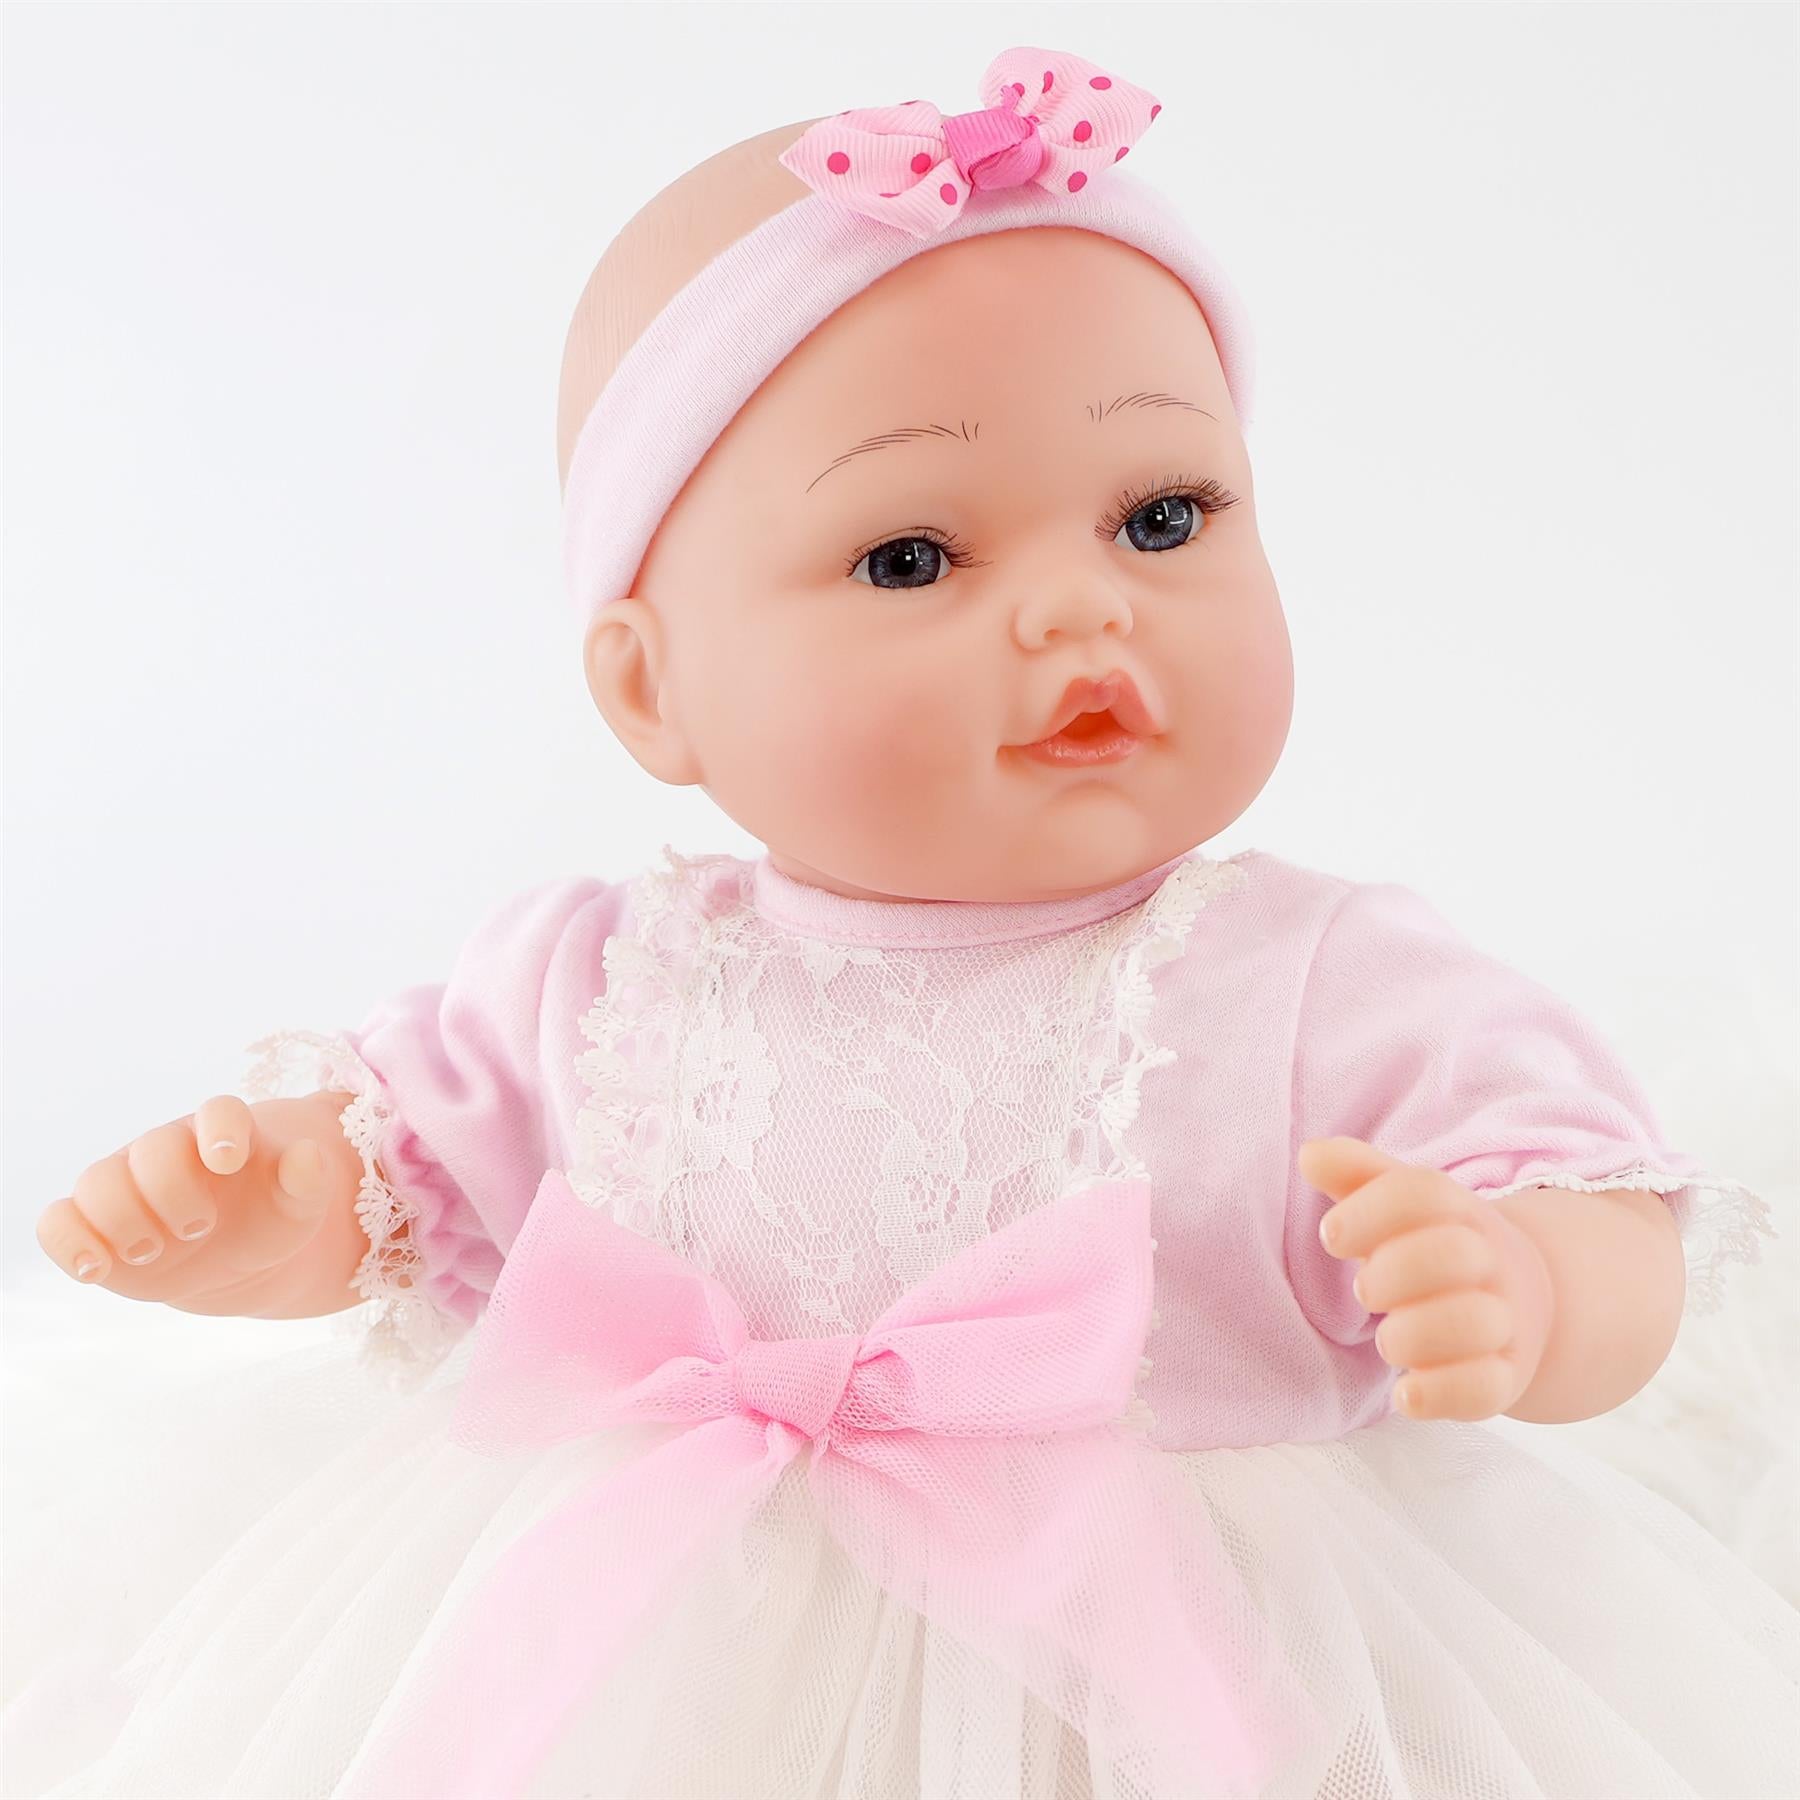 BiBi Doll Baby Doll Lifelike Reborn Baby Girl Doll with Open Eyes 17"